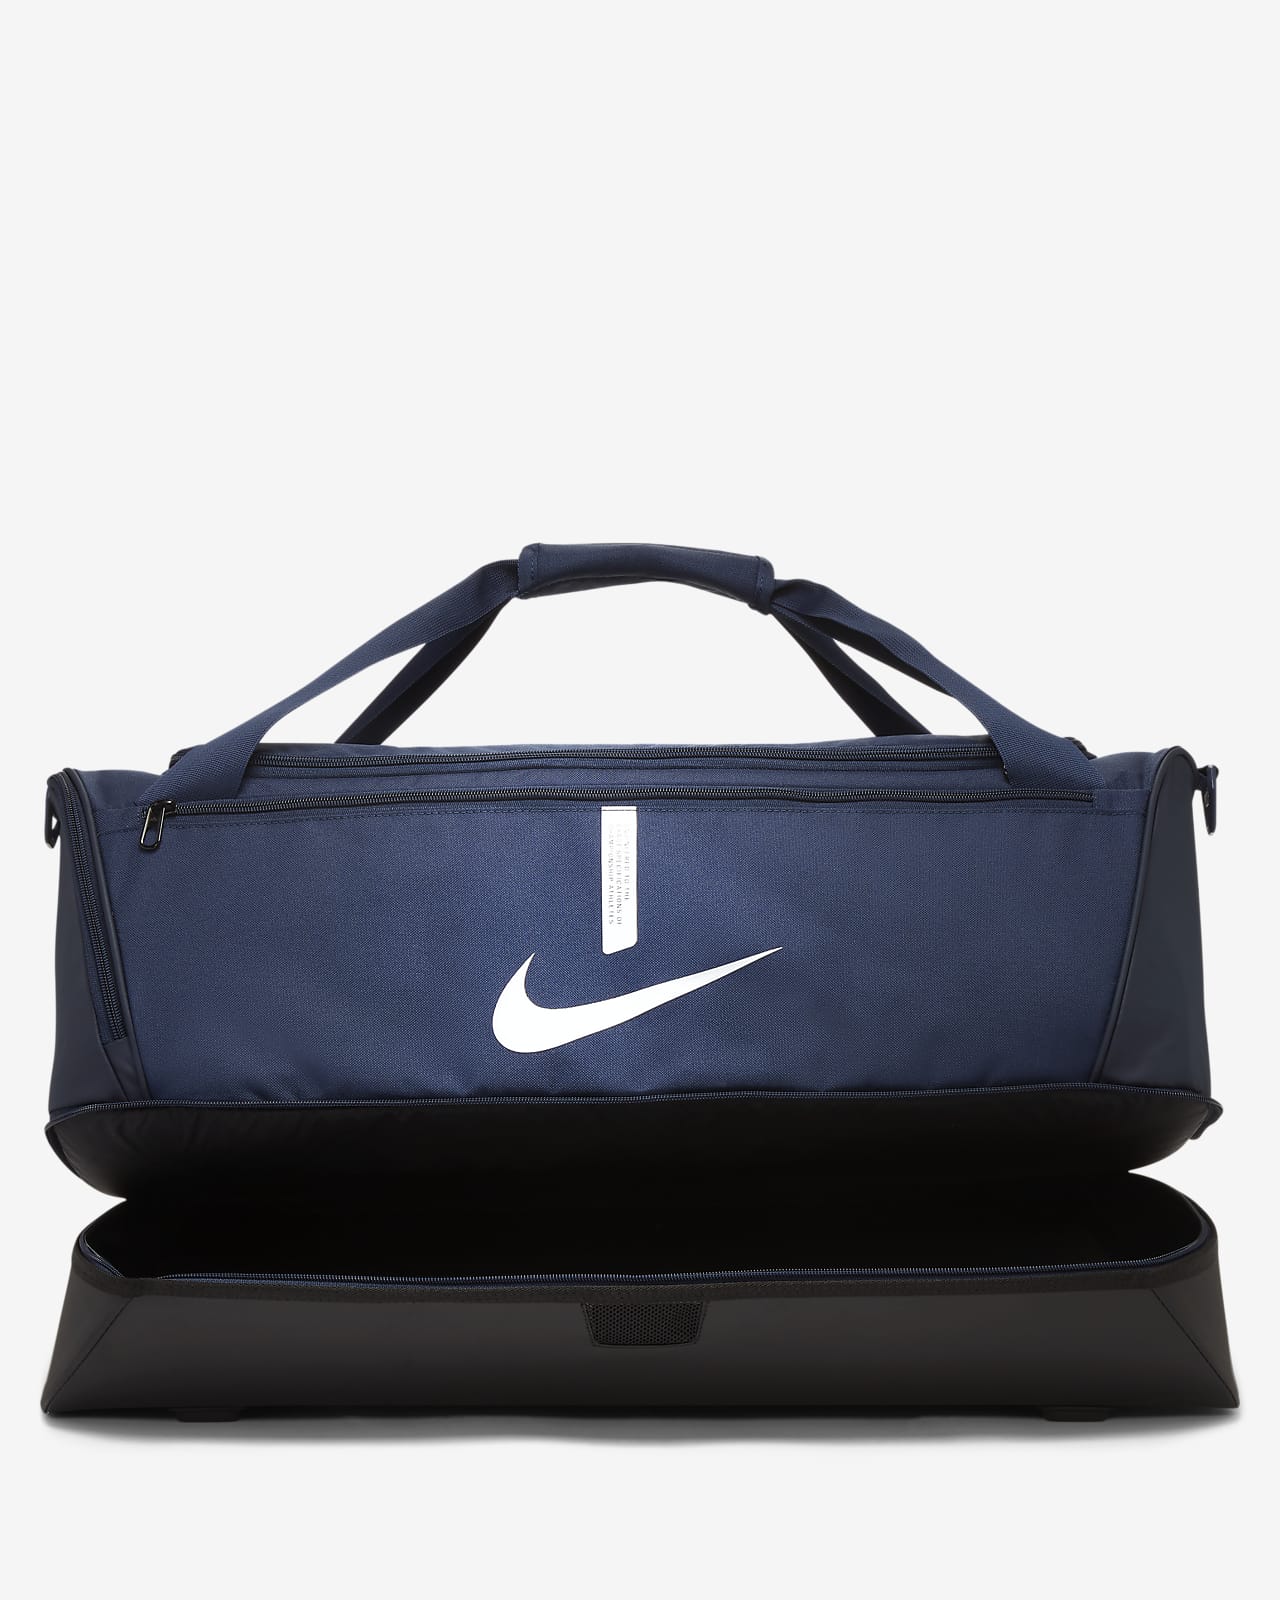 Nike Academy Team Football Hardcase Duffel Bag (Large, 59L). Nike IE